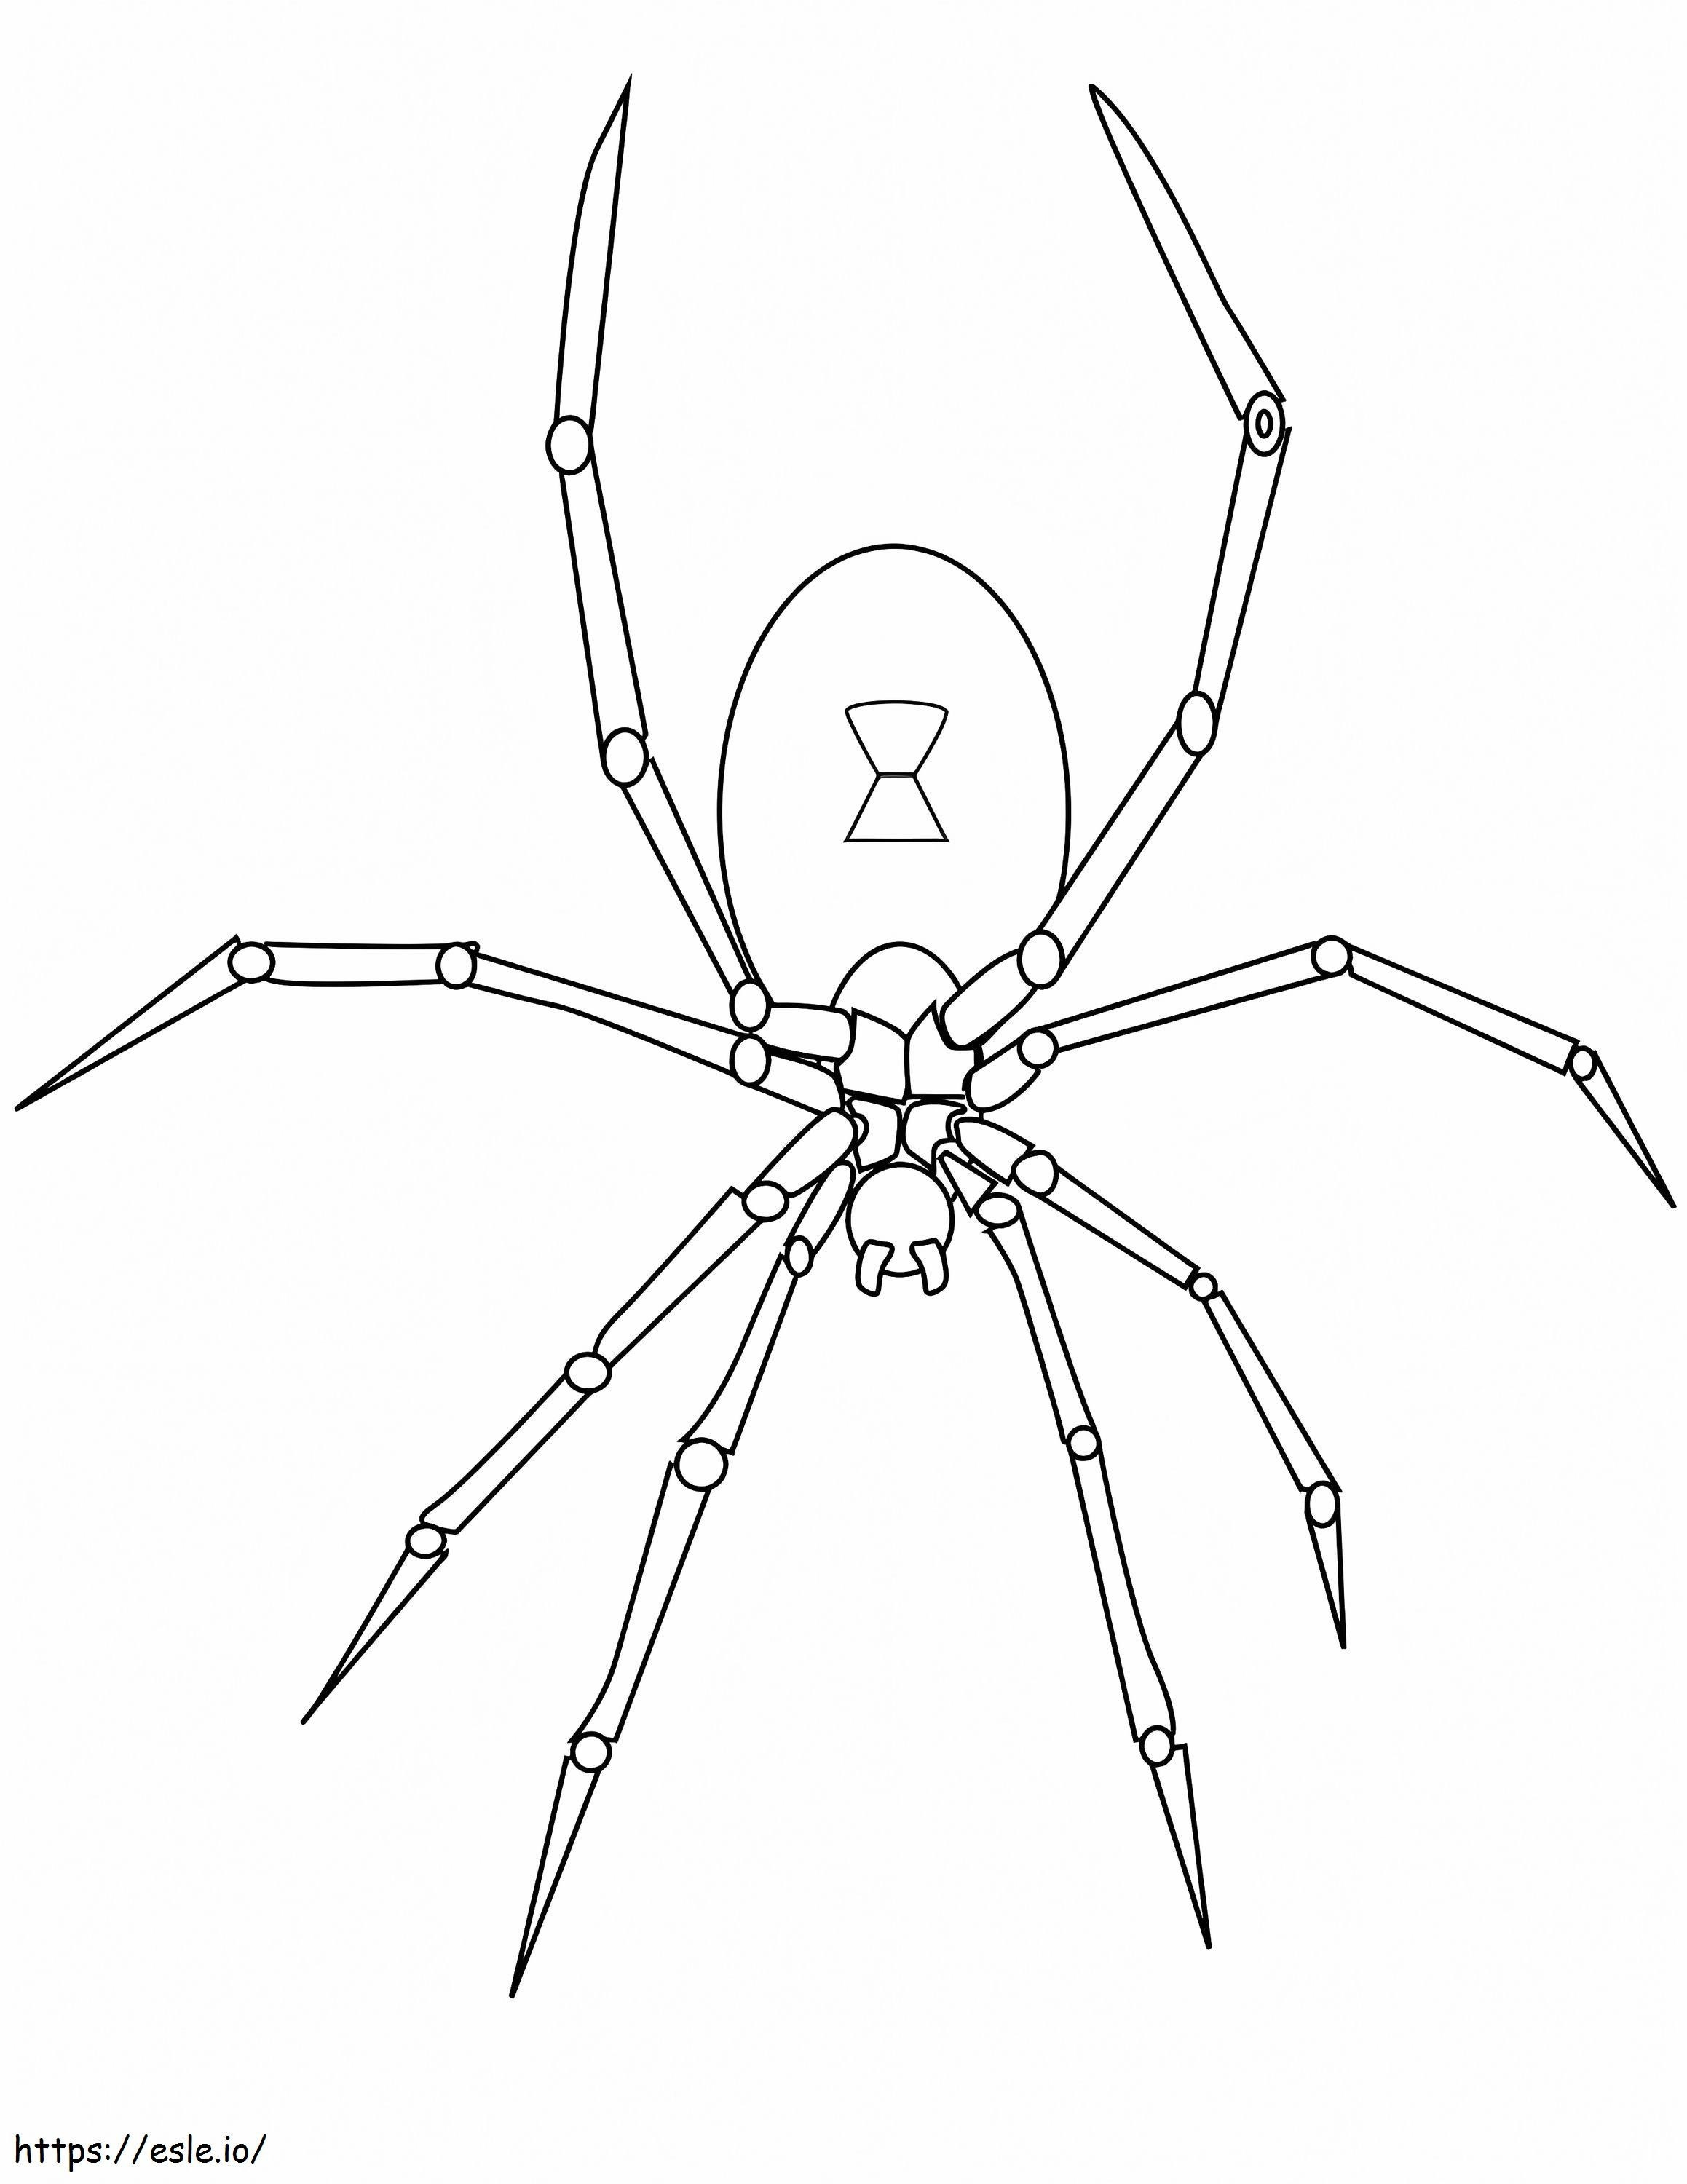 Normale Spinne ausmalbilder